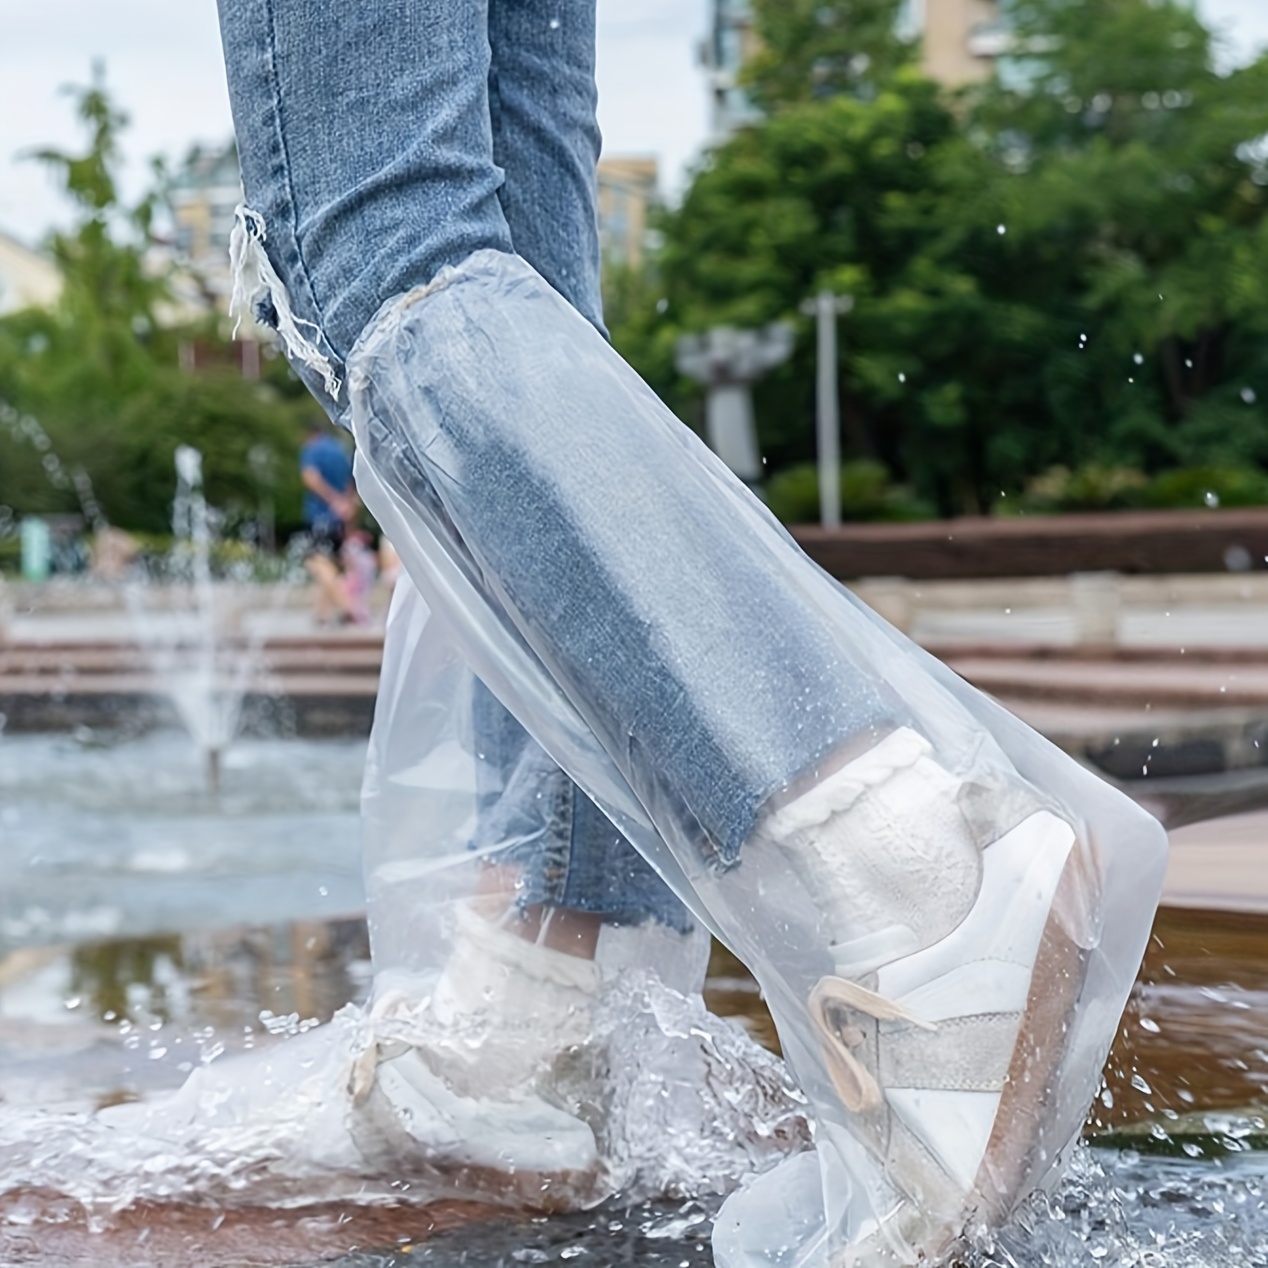 Fundas desechables azules para zapatos de lluvia y botas, cubierta de  plástico larga para zapatos, transparente, impermeable, antideslizante,  para